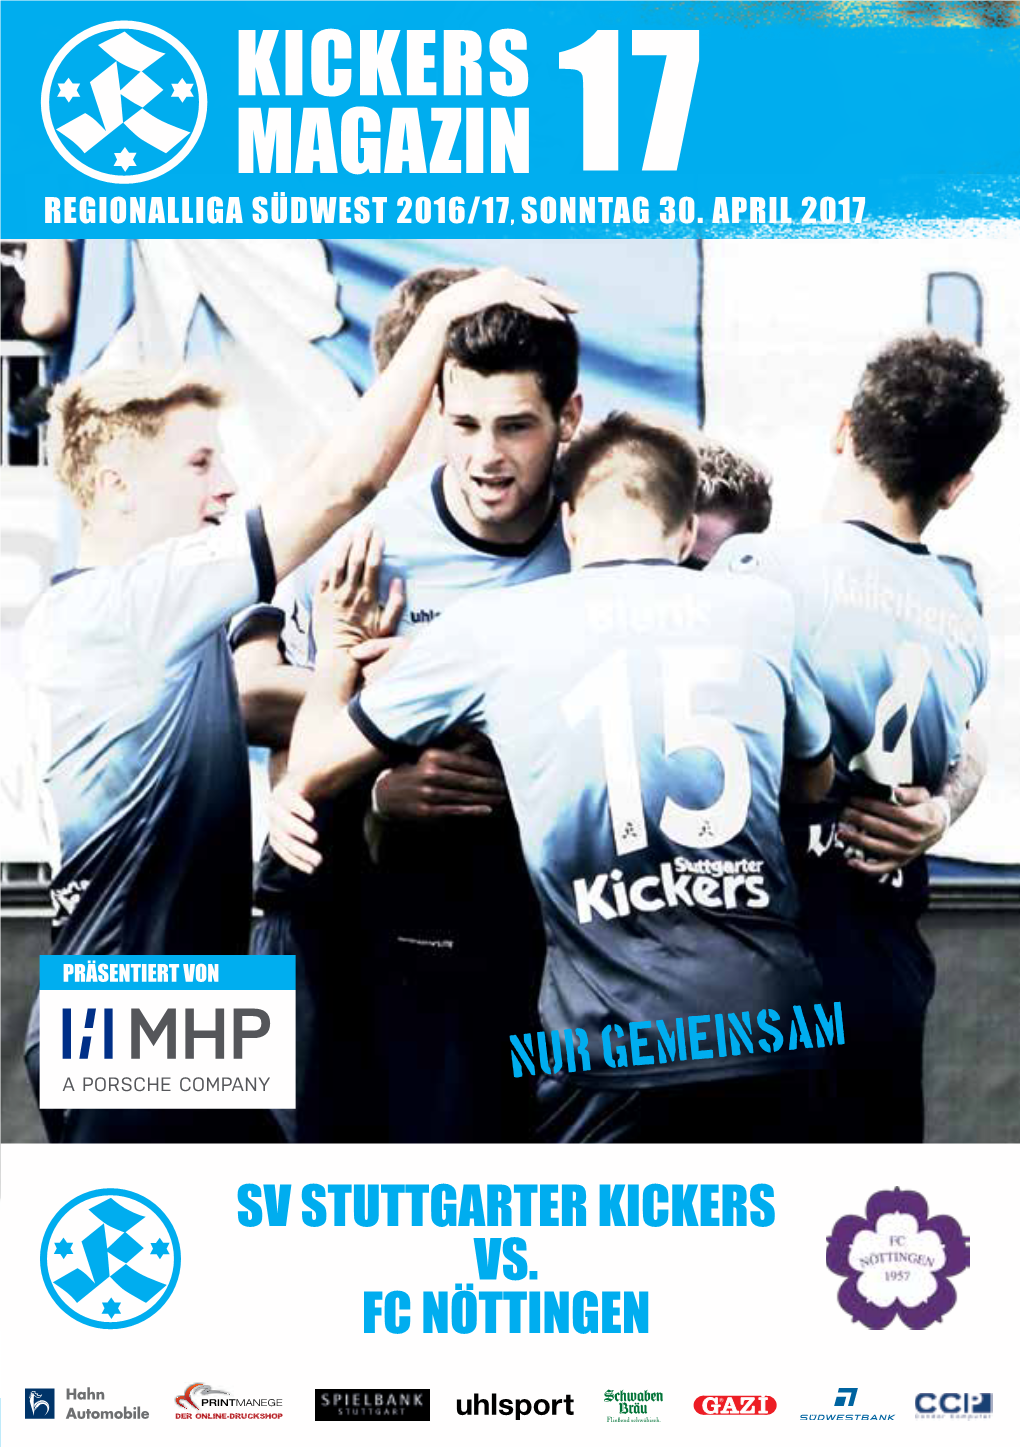 Kickers Magazin 17 Regionalliga Südwest 2016/17, Sonntag 30